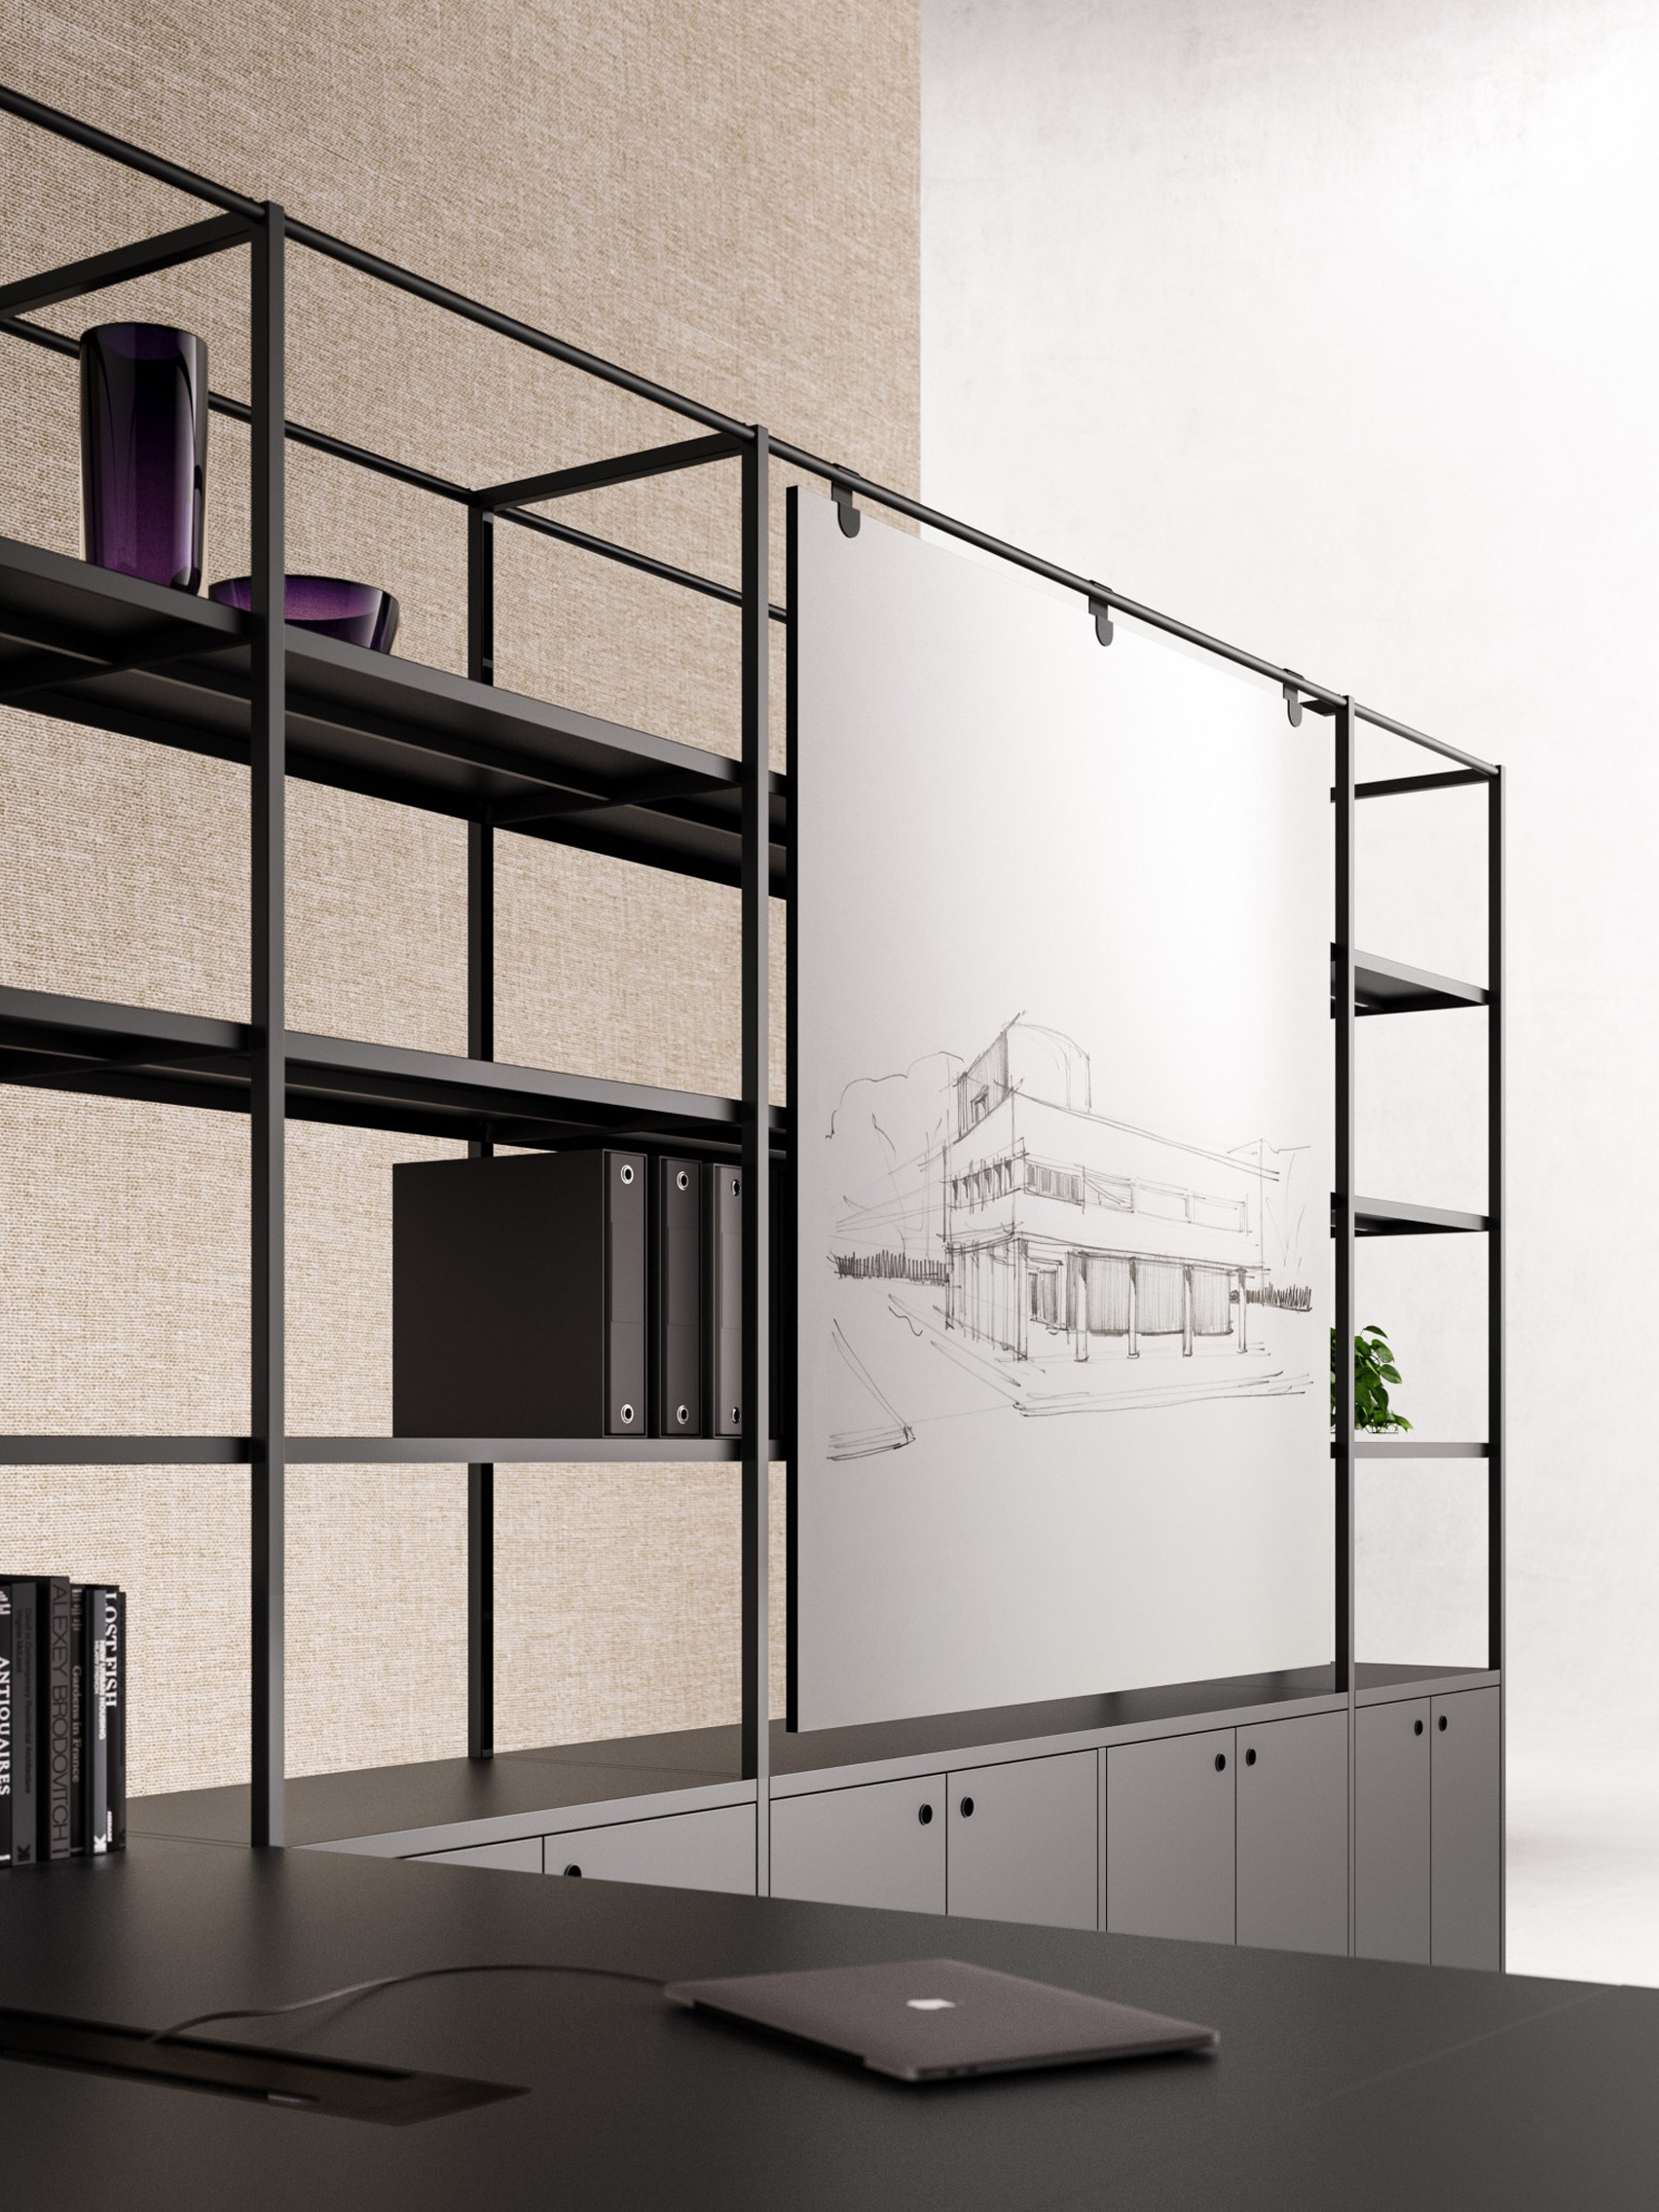 atelier-modular-furniture-system-gensler-workplace-design_dezeen_1704_col_5.jpg